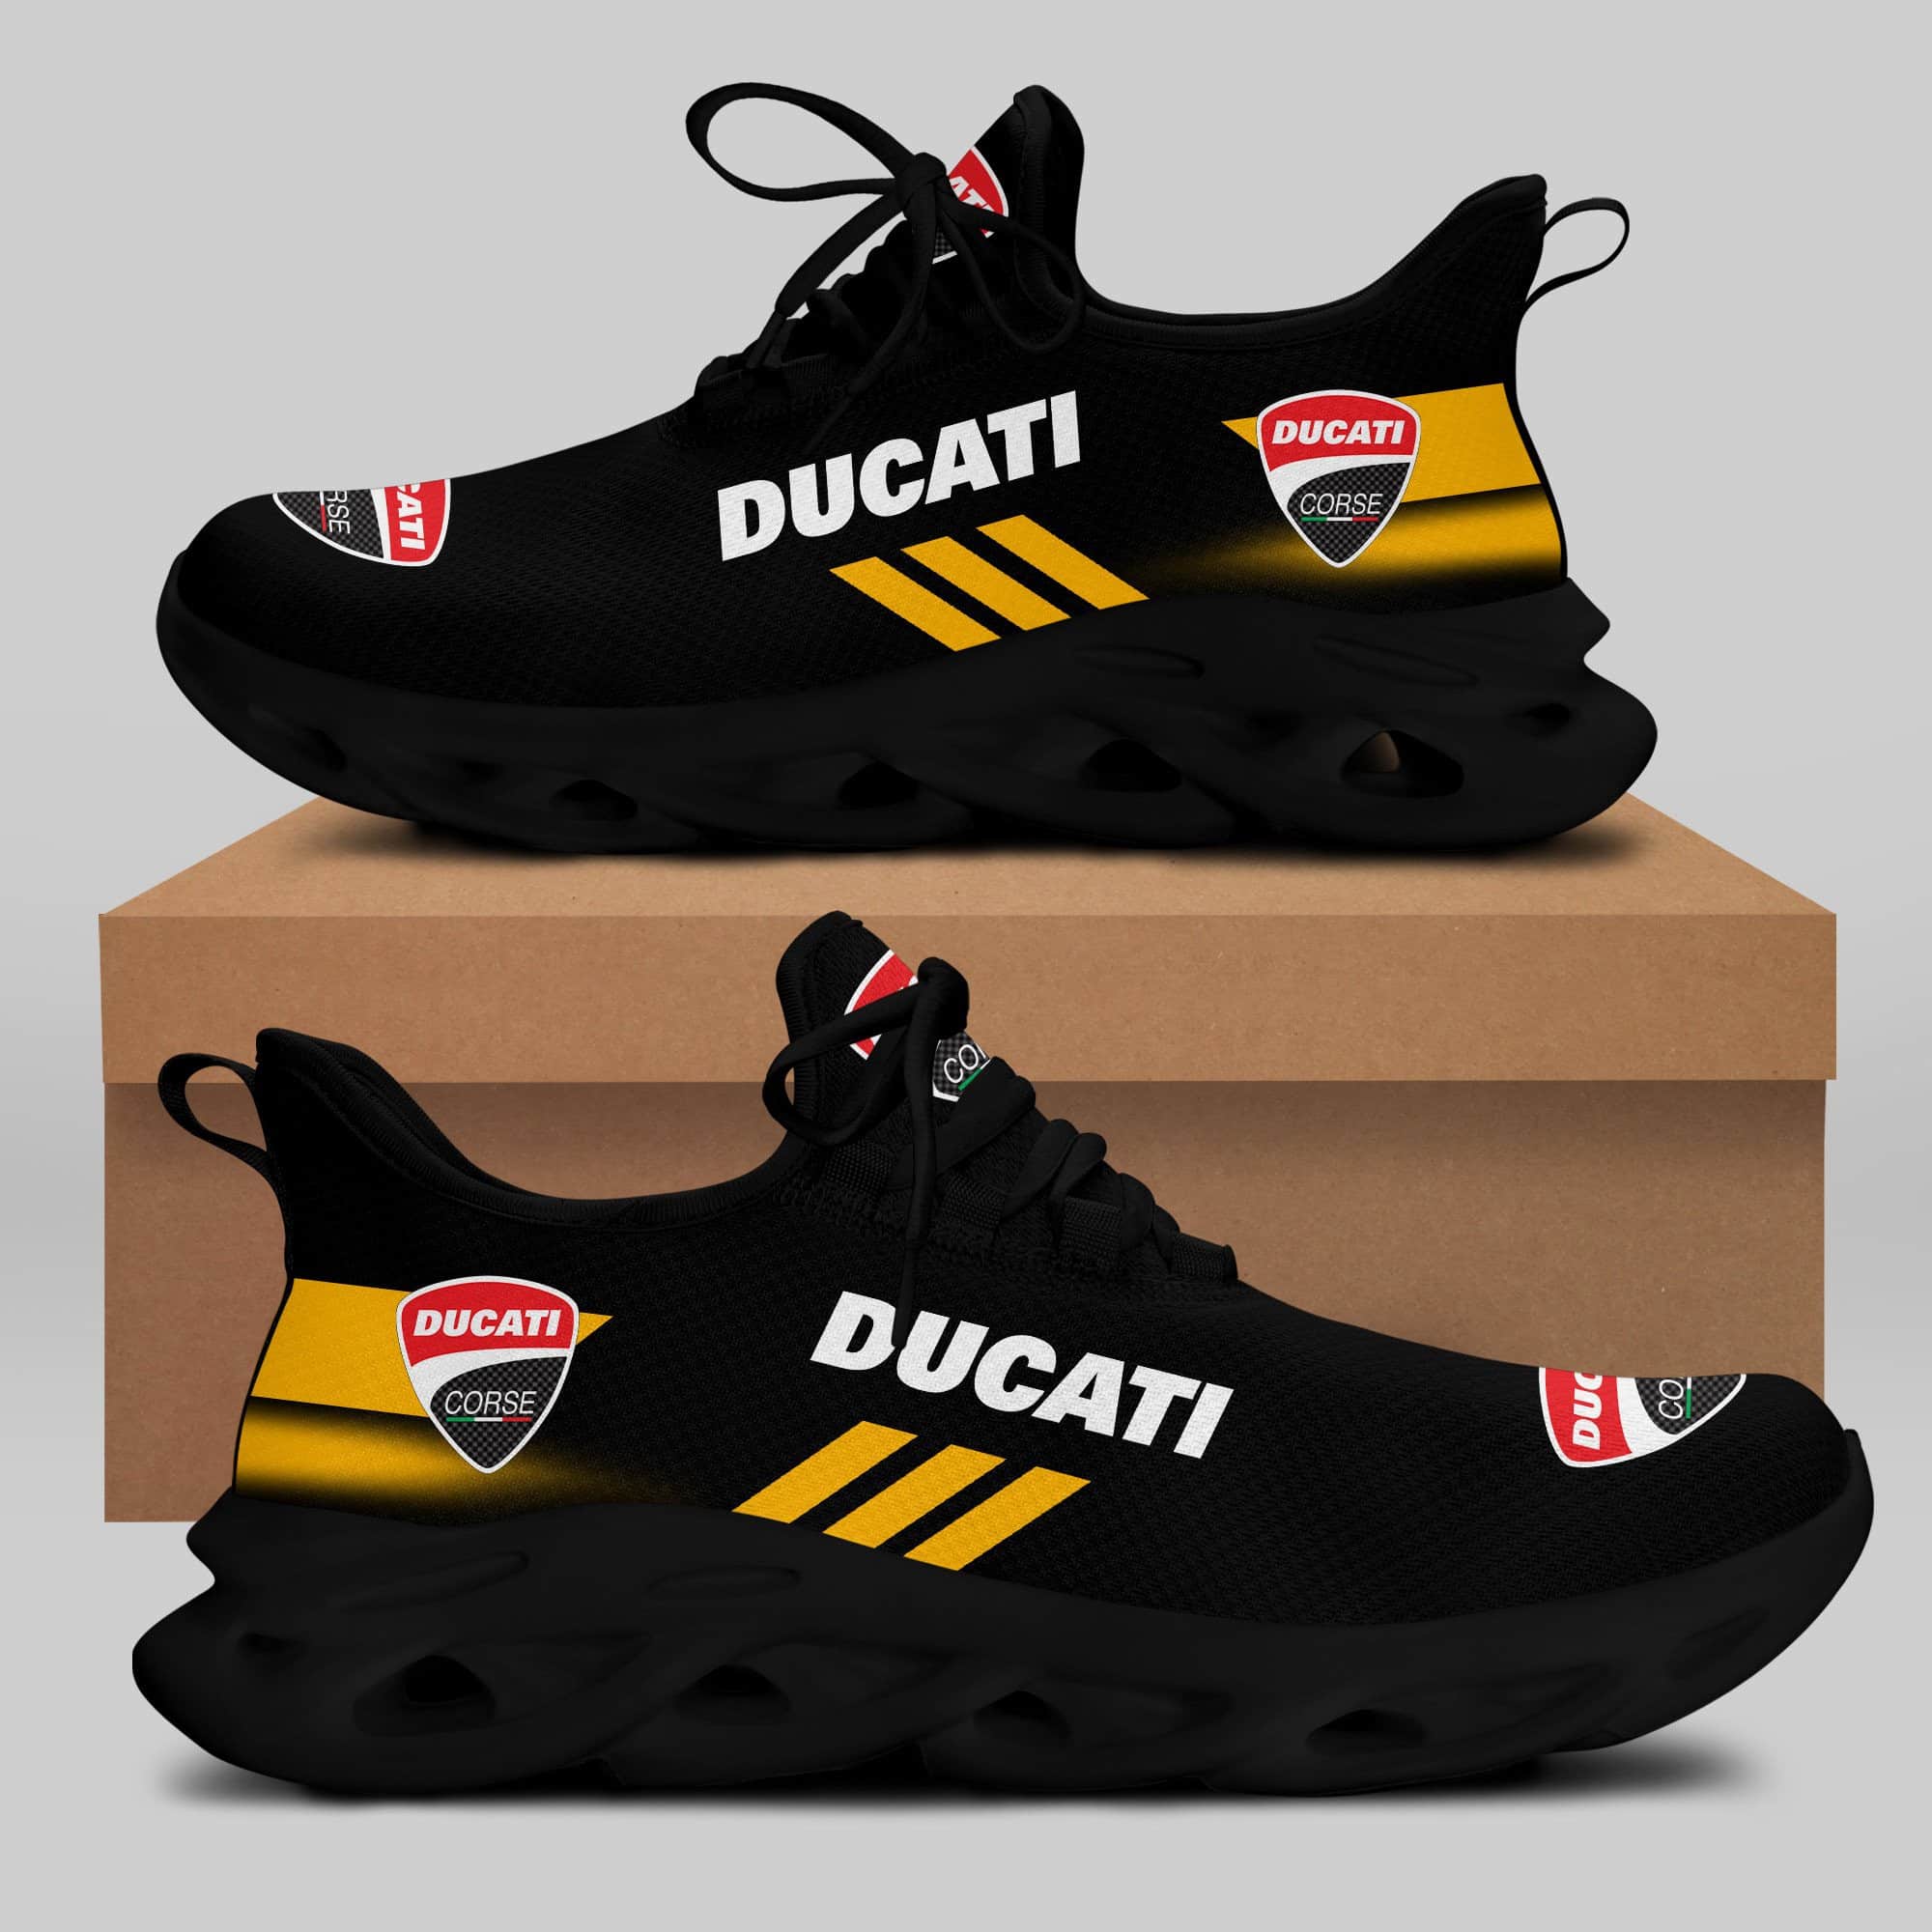 Ducati Racing Running Shoes Max Soul Shoes Sneakers Ver 35 1